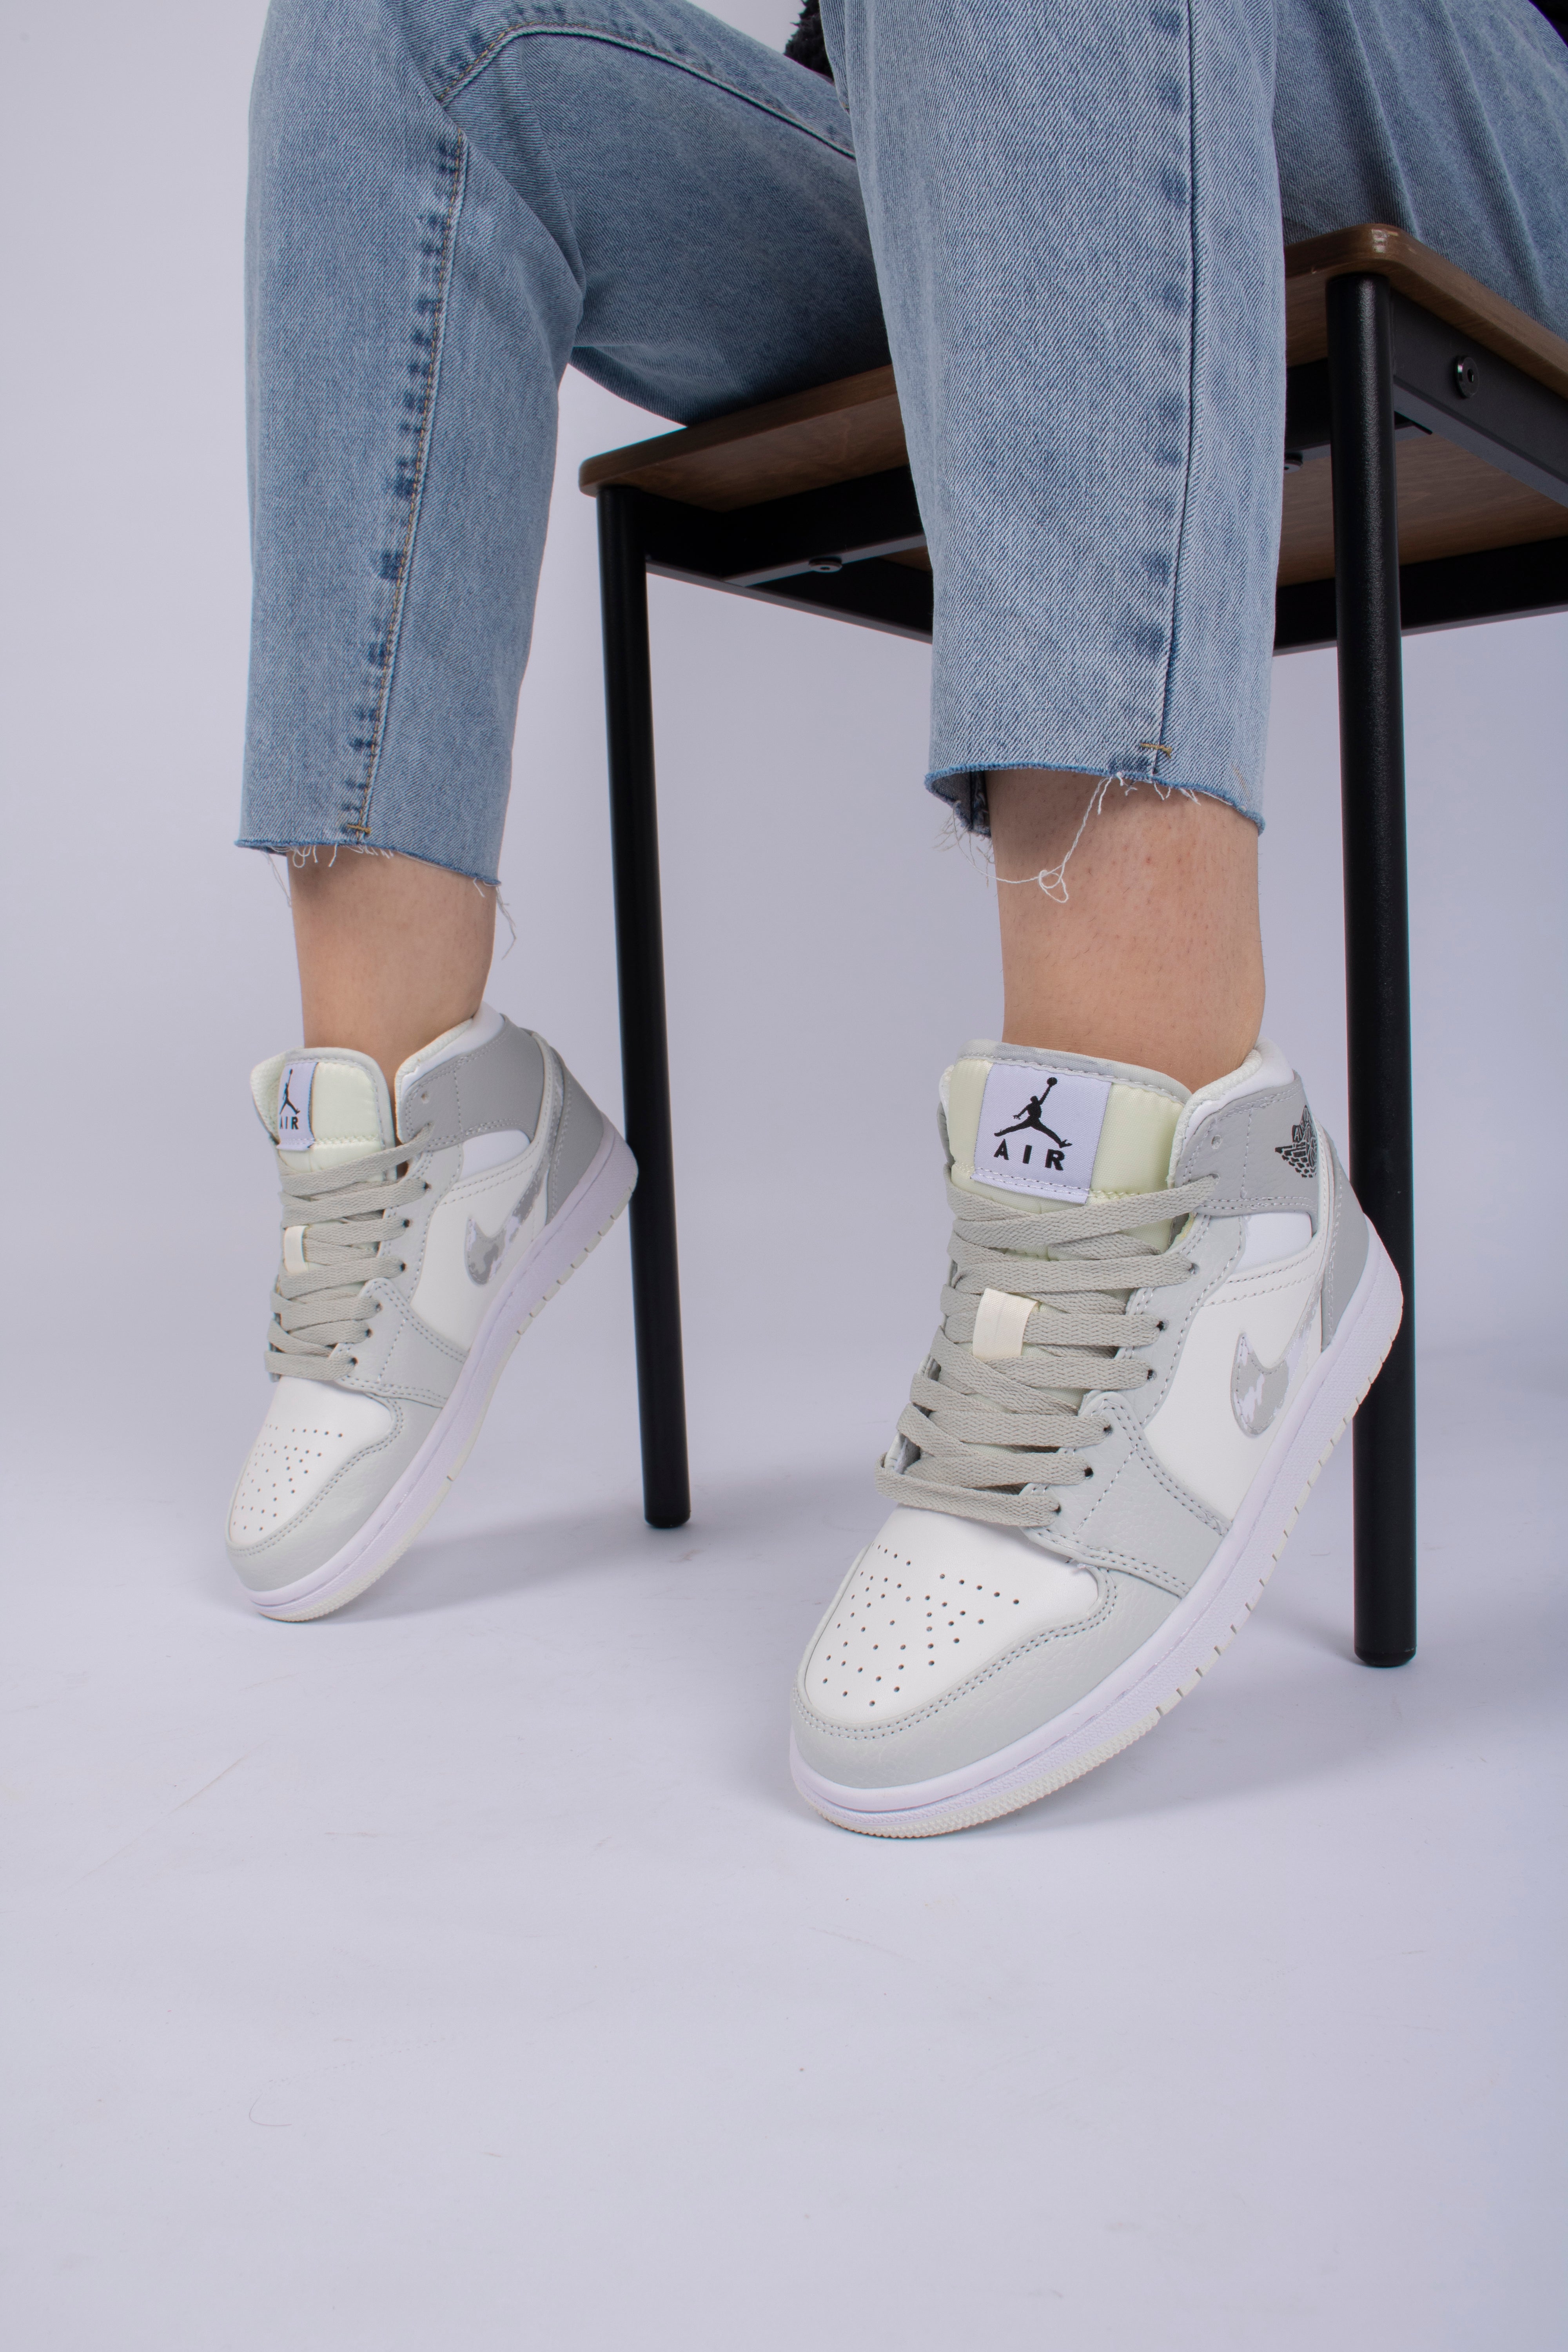 Nike Air Jordan 1 OG “Grey Camo”